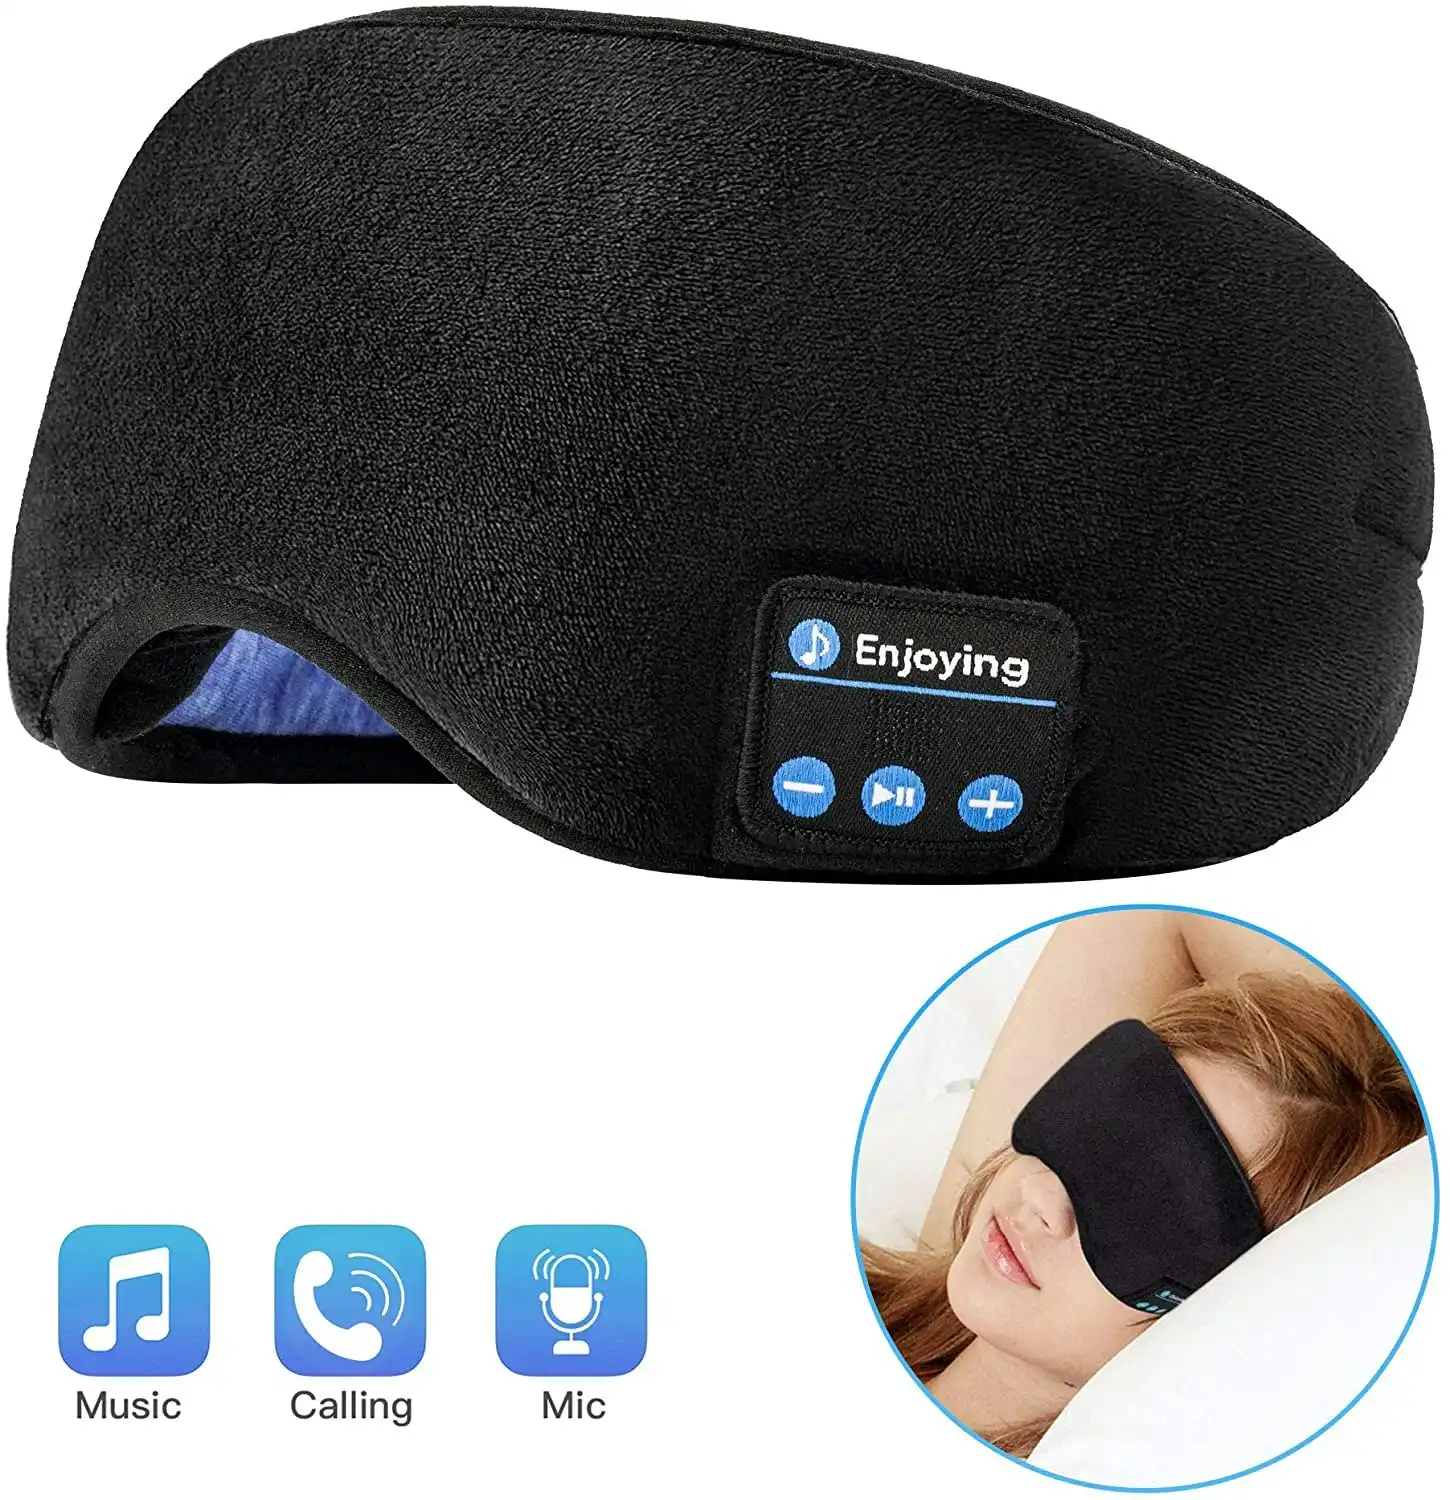 Voerou Sleep Headphones Wireless Bluetooth Sleep Eye Mask Music and Ultra Thin Speakers Perfect for Sleeping, Air Travel,Meditation and Relaxation - B